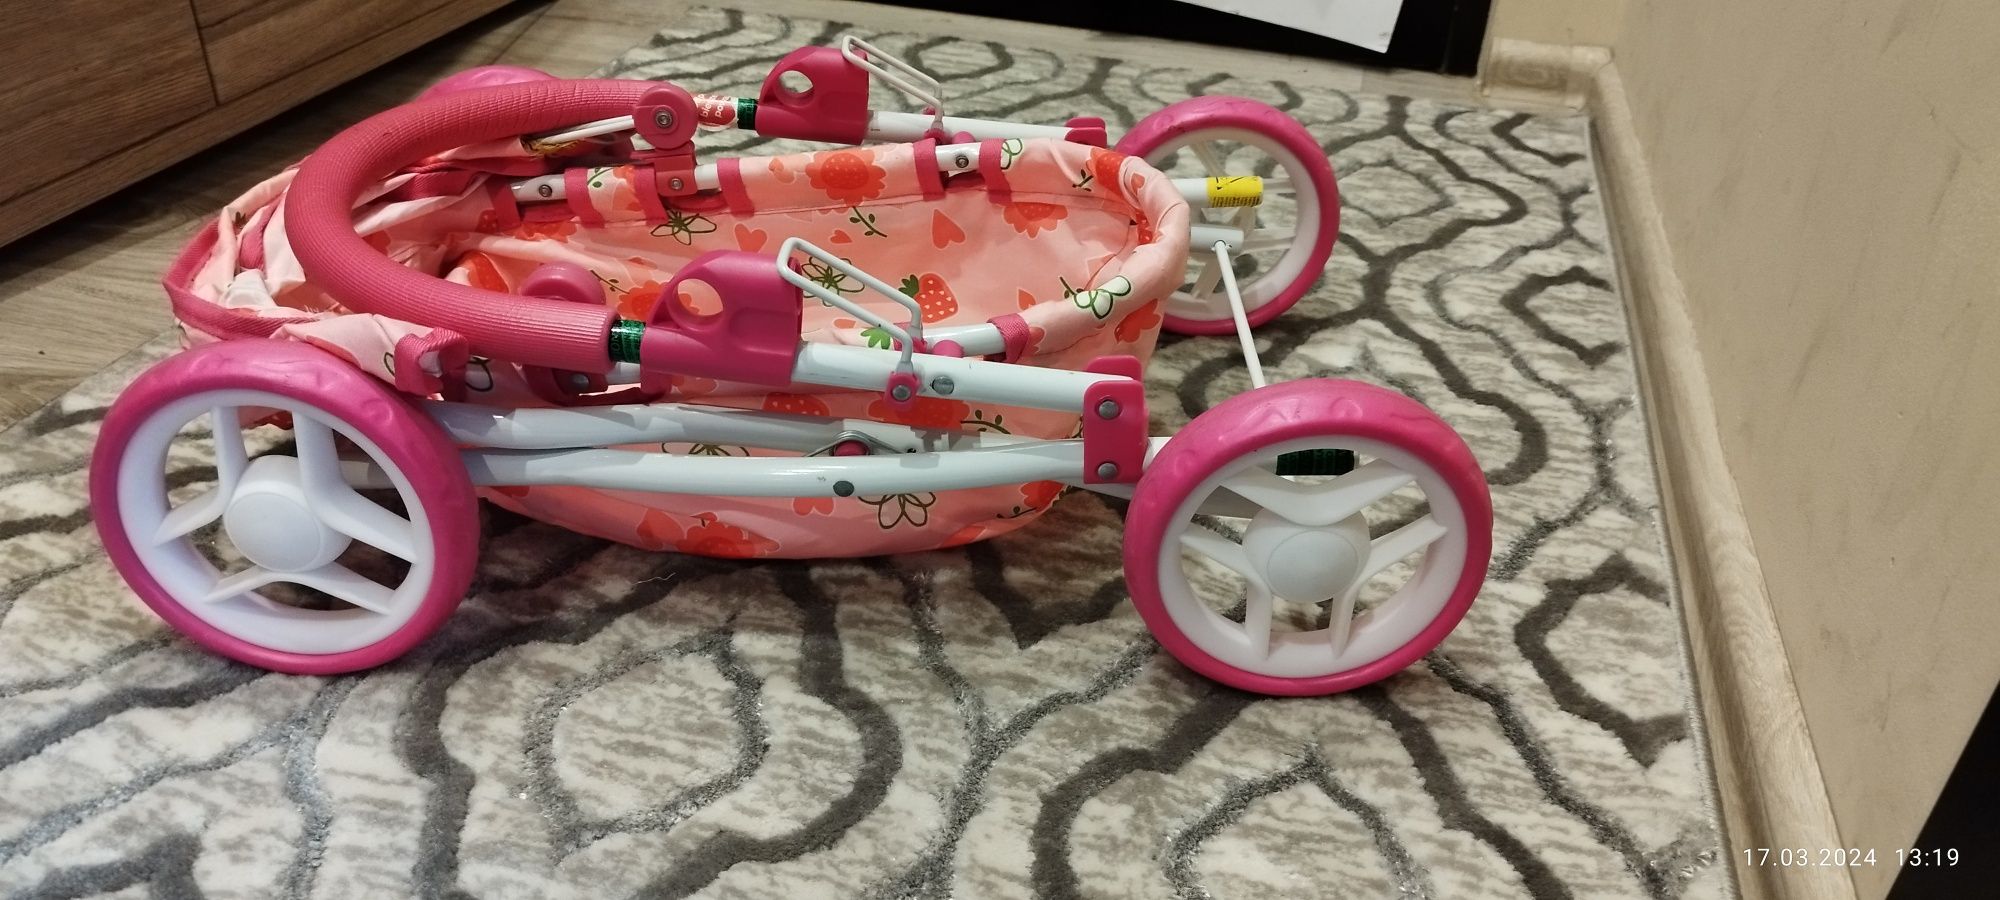 Wózek dla lalek, gondola baby mix składany